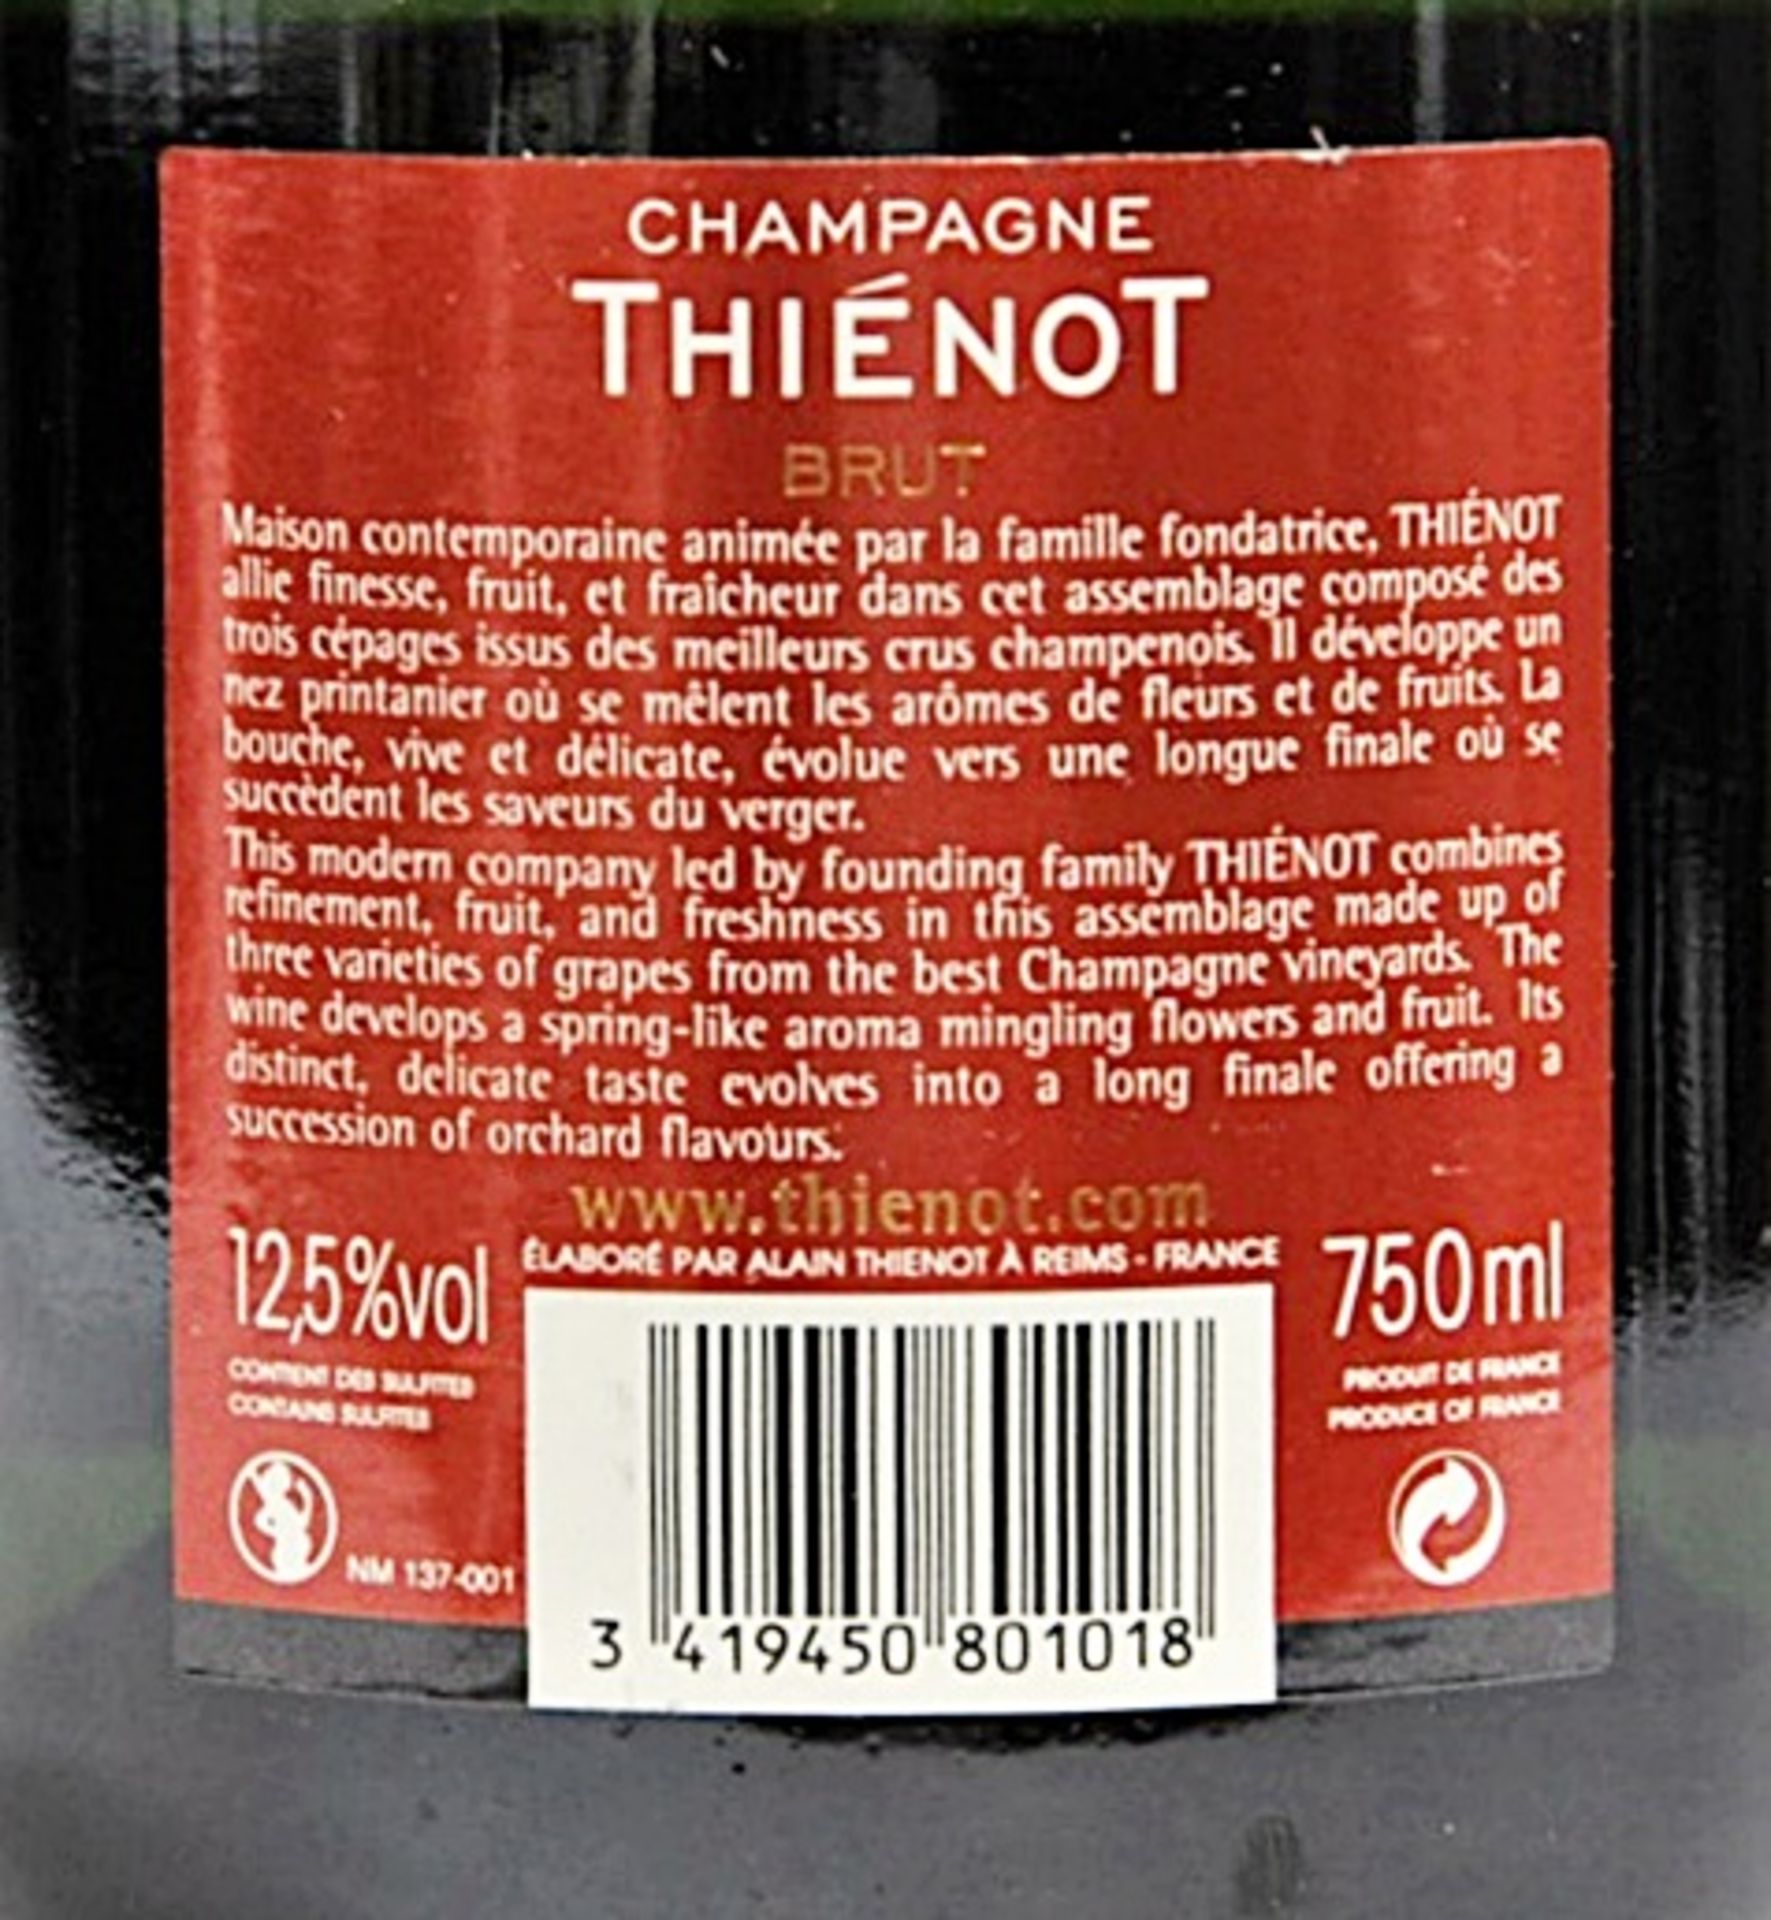 1 x Thienot Brut, Champagne, France – NV – Bottle Size 75cl – Volume 12.5% - Ref W1216 - CL101 - - Image 2 of 4